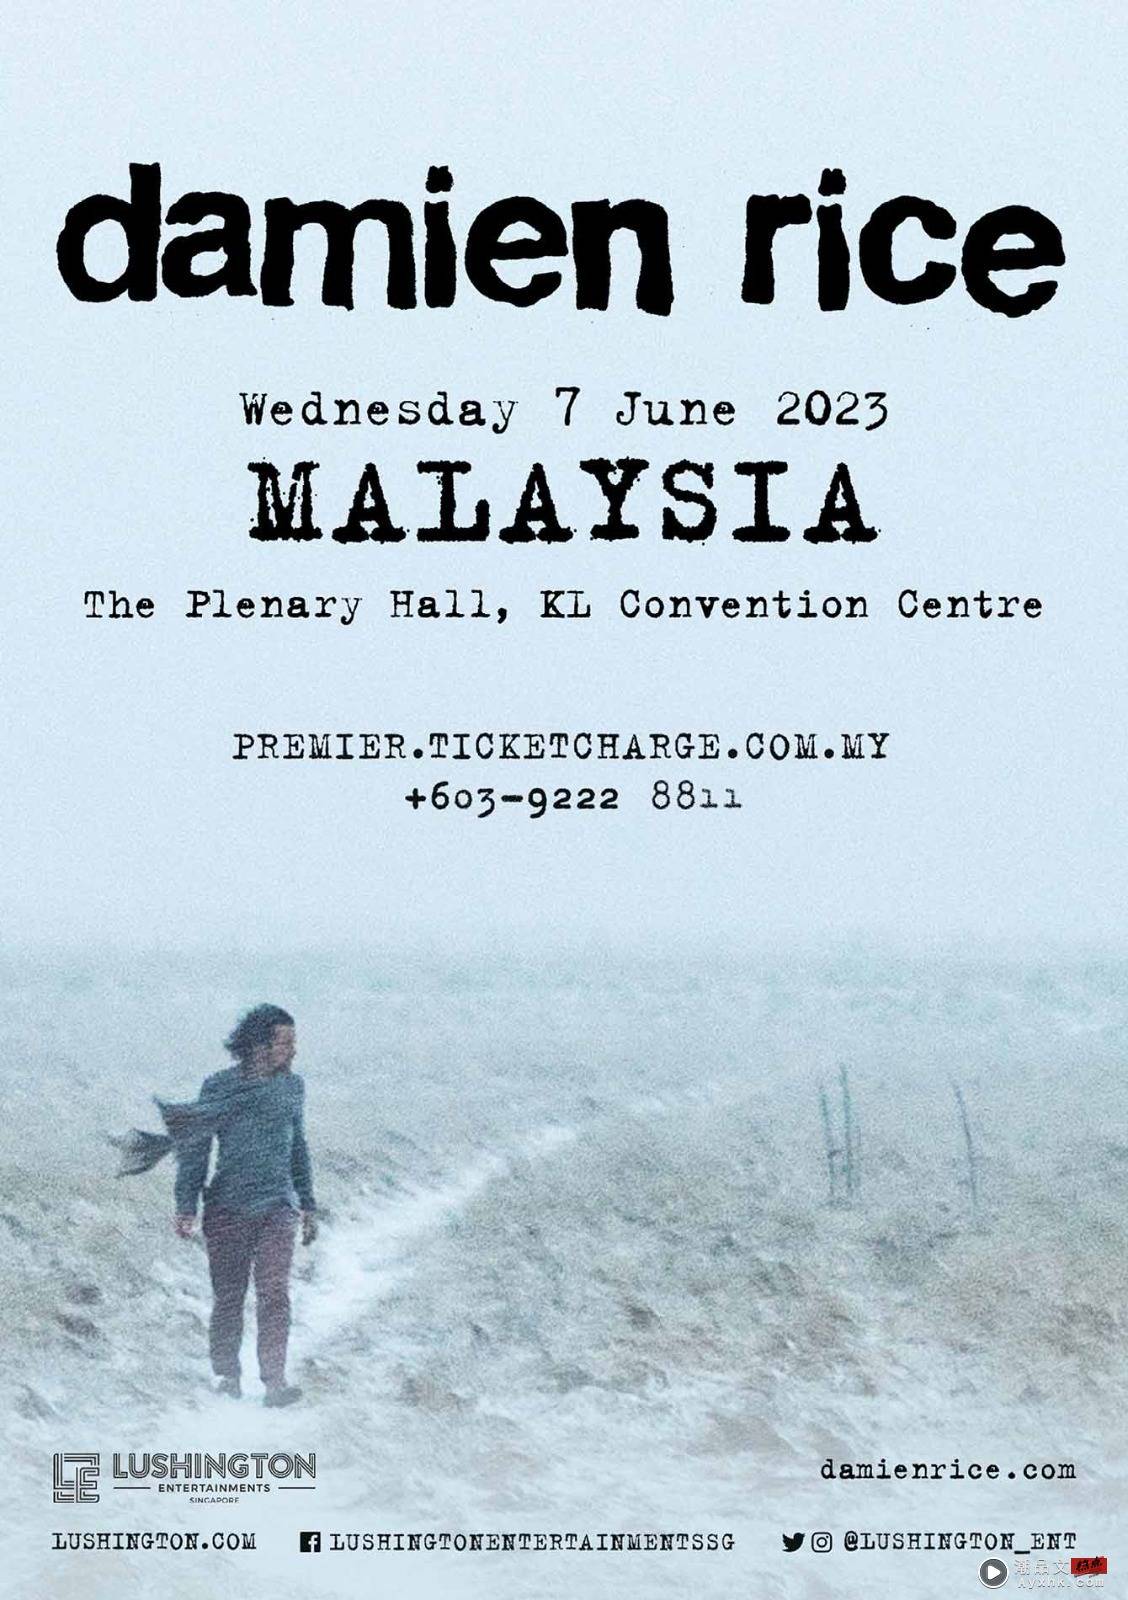 Damien Rice赴马来西亚！6月7日吉隆坡开唱！ 娱乐资讯 图1张